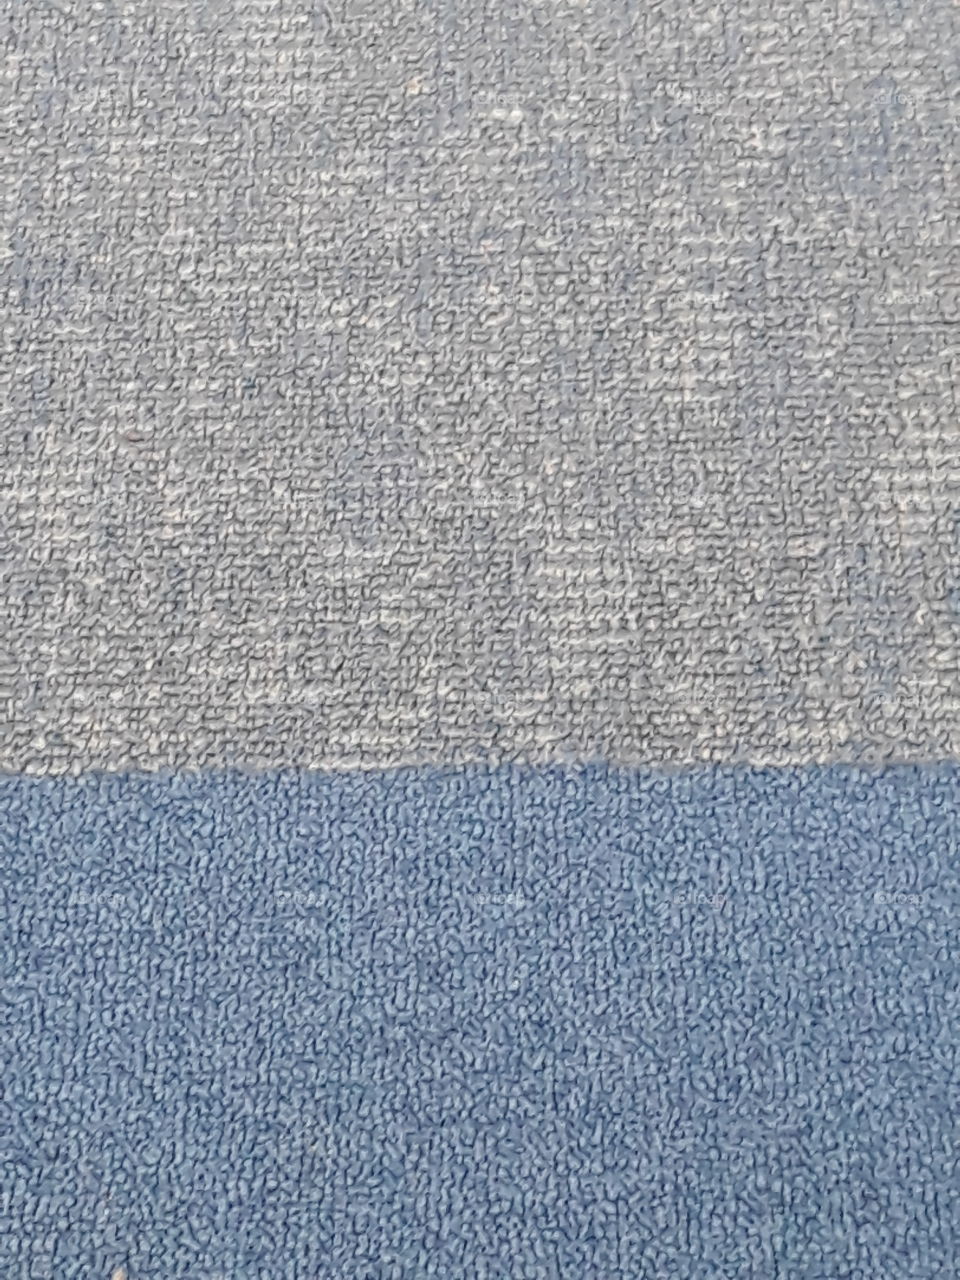 grey and blue carpet